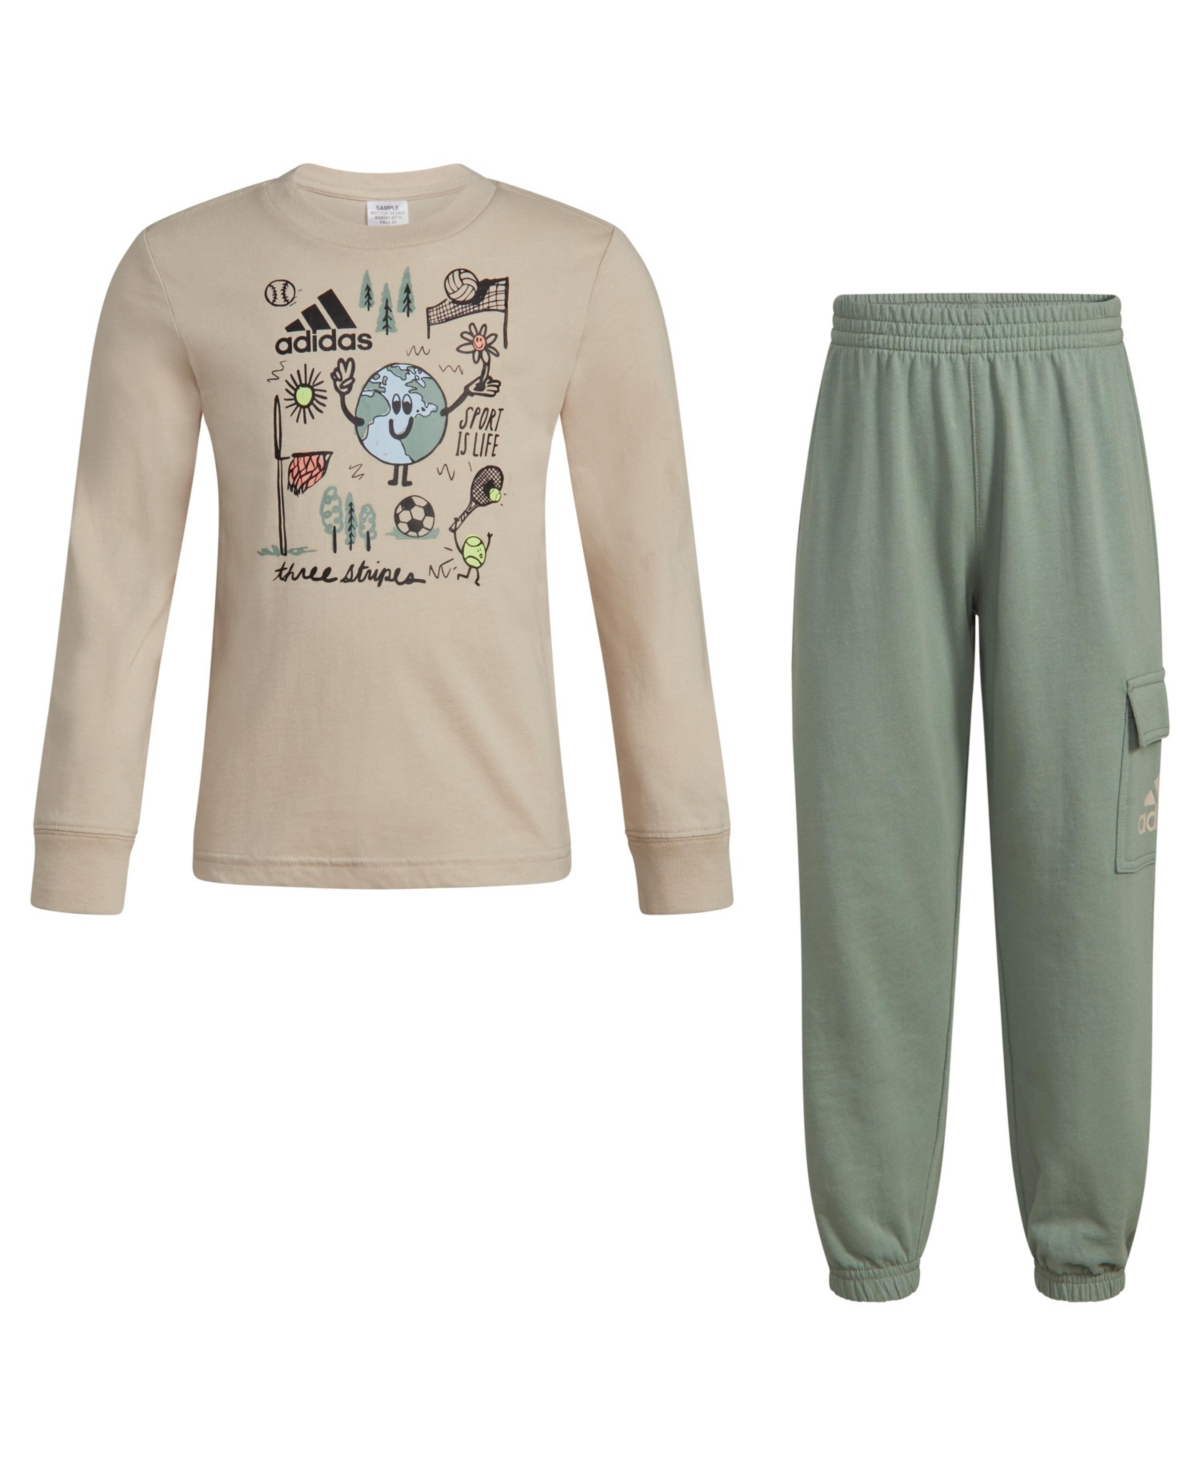 Adidas Originals Toddler Boys Long Sleeve Cotton T-shirt And Cargo Joggers, 2 Piece Set In Wonder Beige